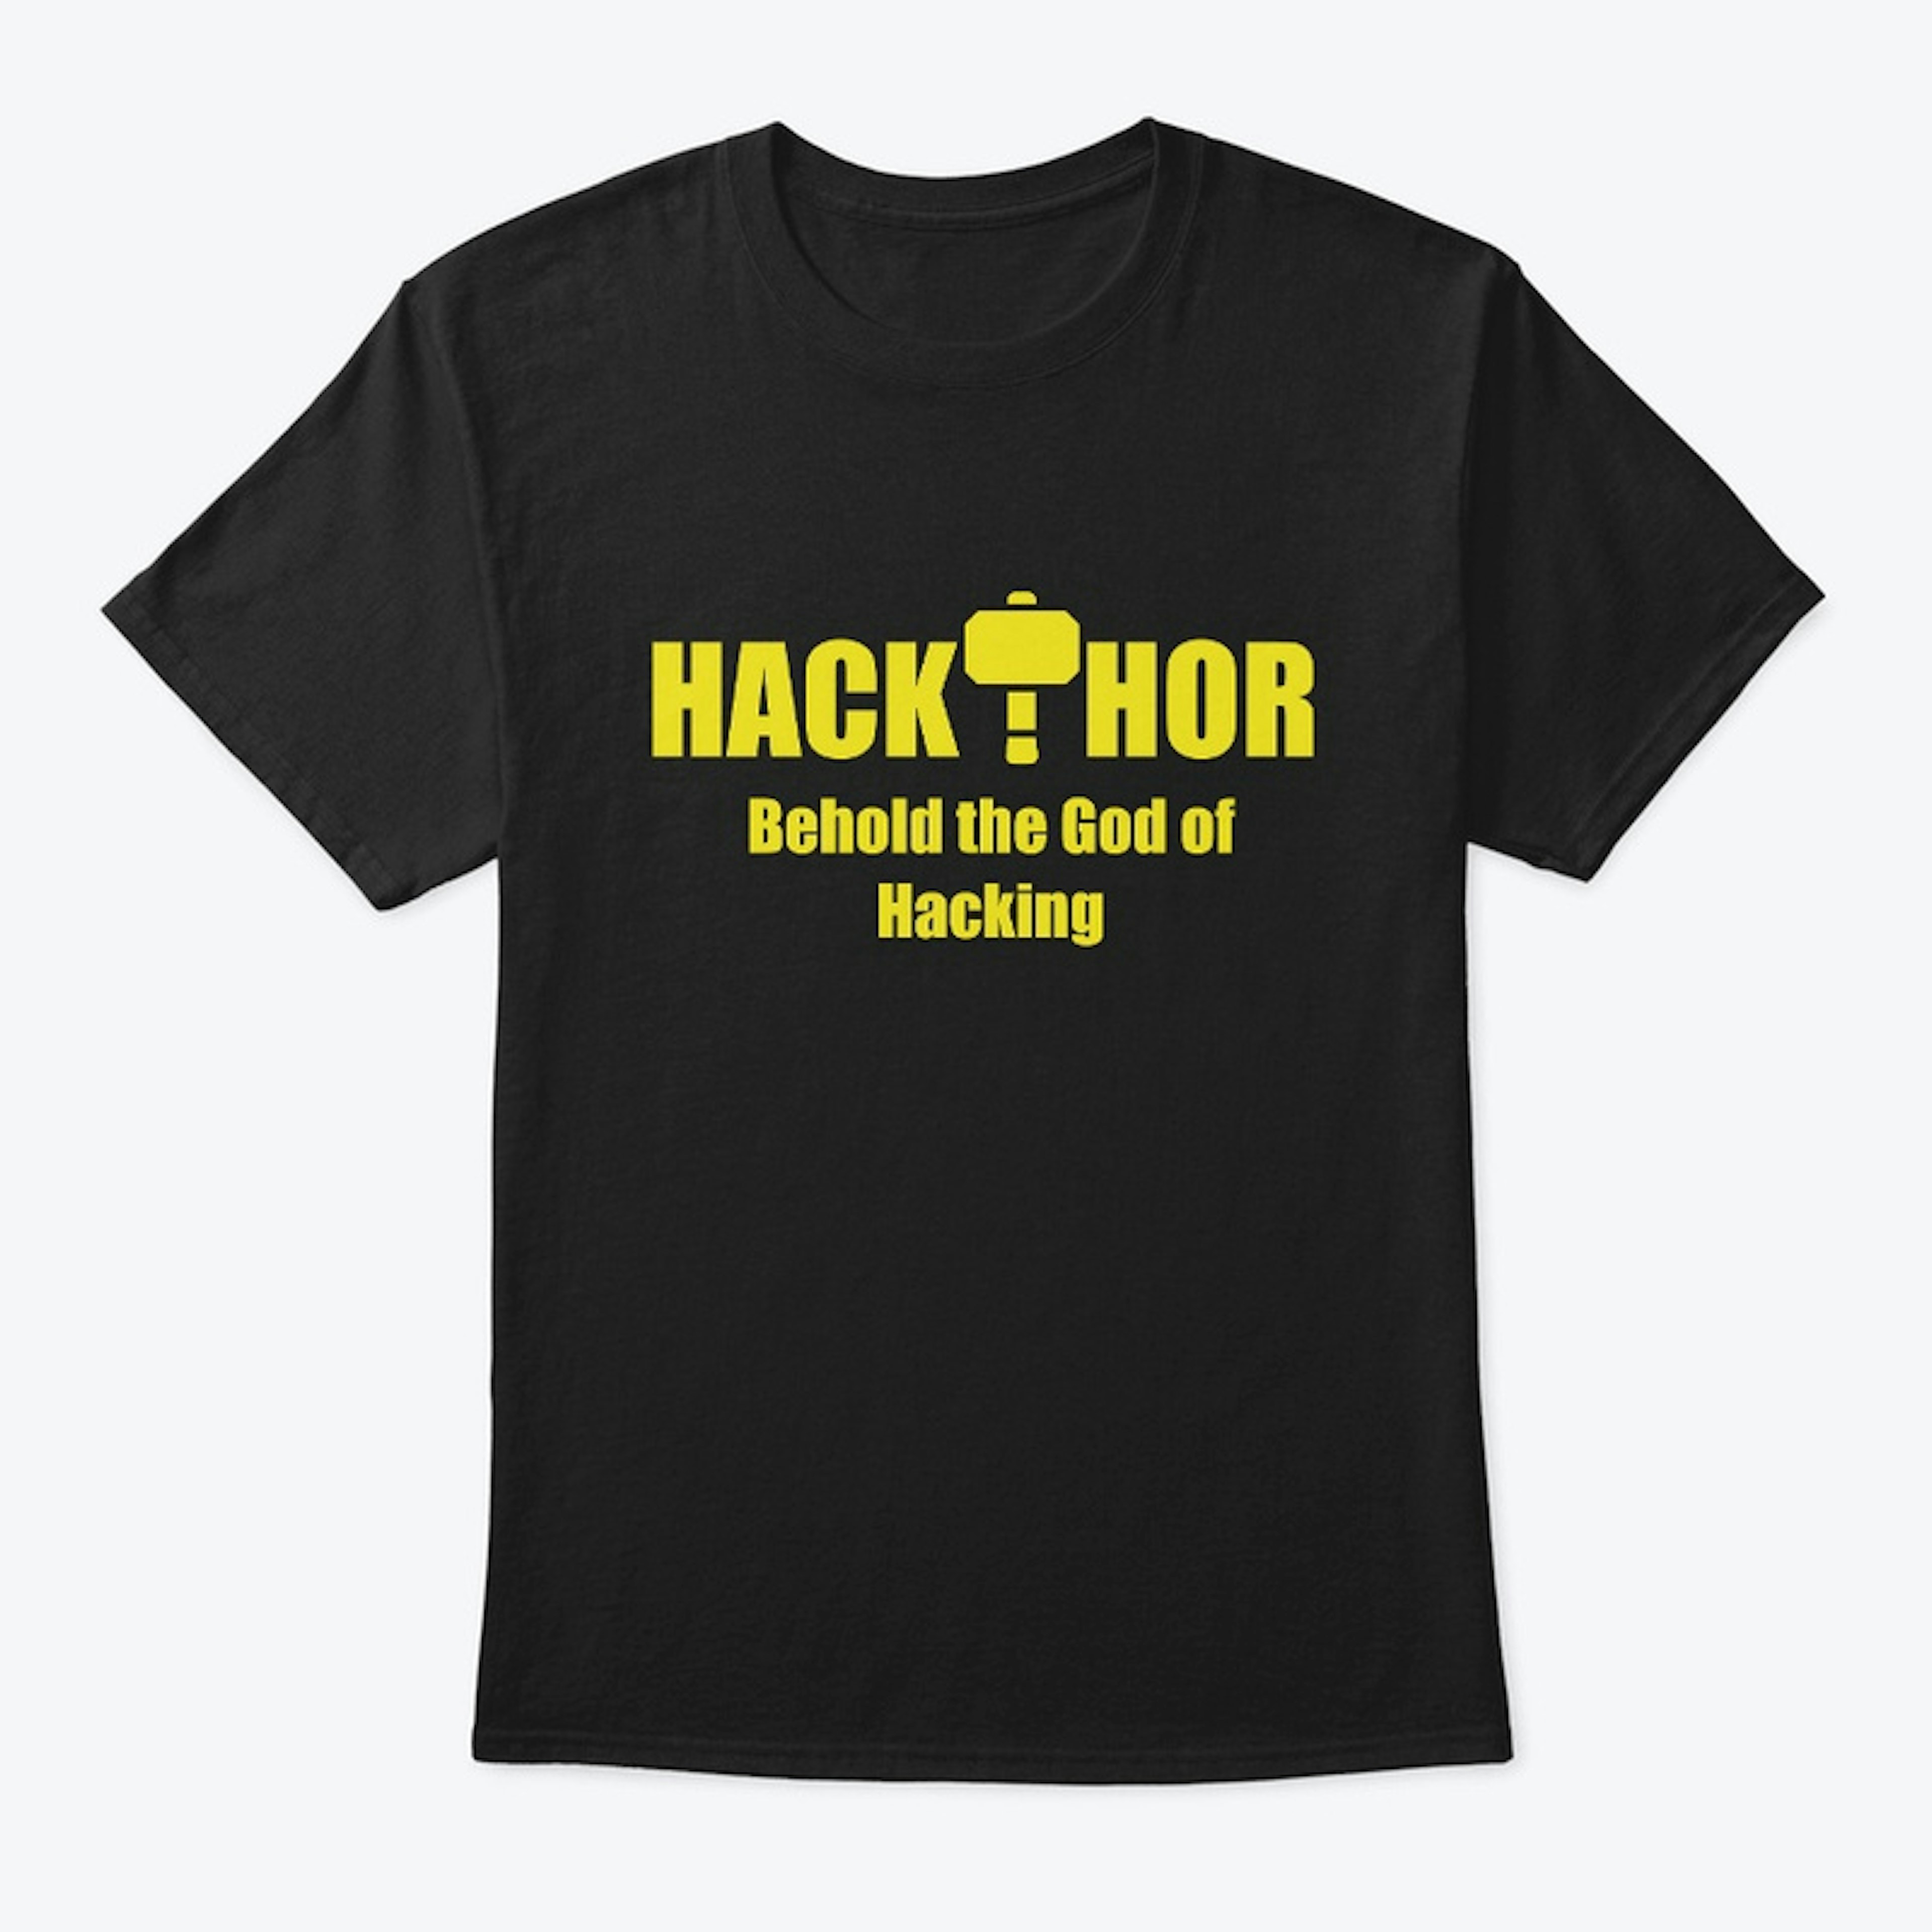 HackThor